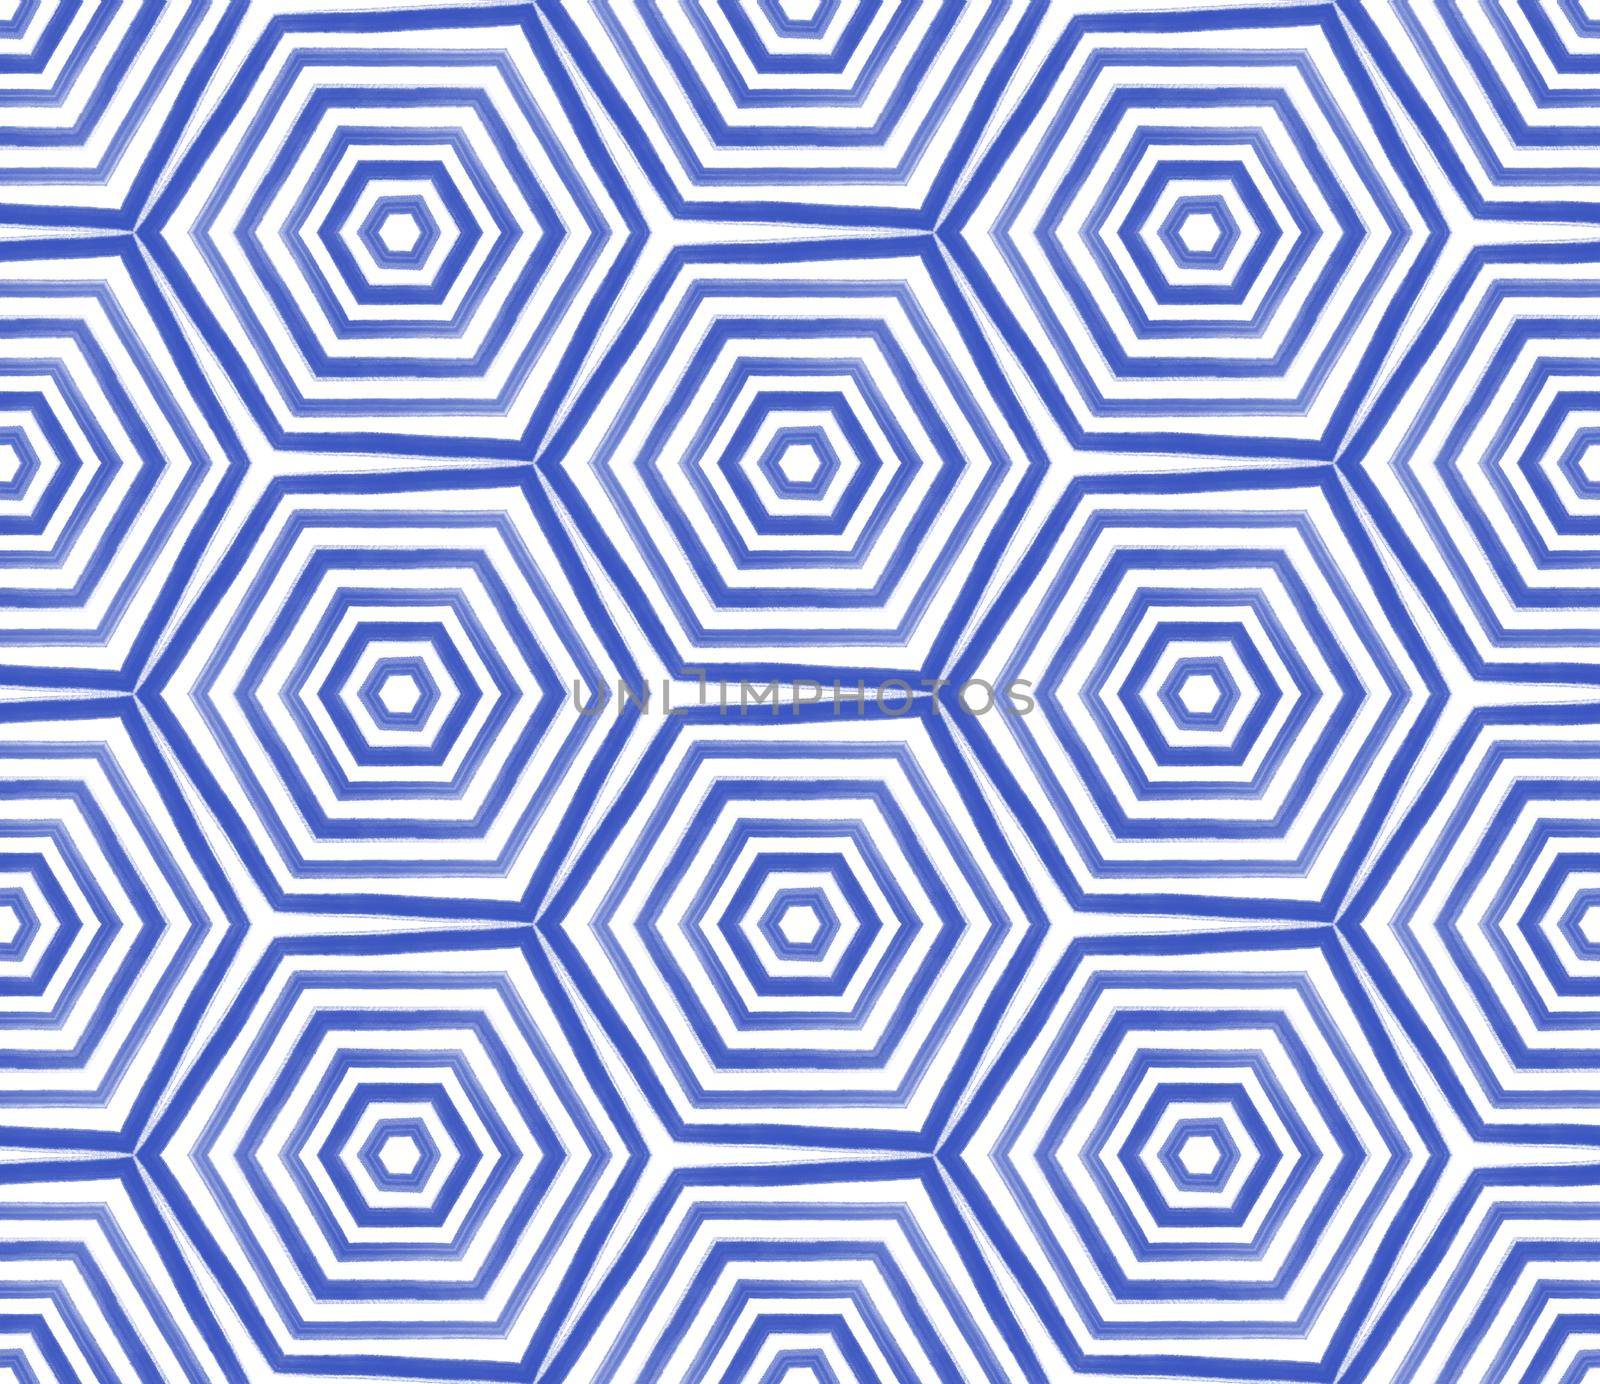 Geometric seamless pattern. Indigo symmetrical kaleidoscope background. Hand drawn geometric seamless design. Textile ready optimal print, swimwear fabric, wallpaper, wrapping.